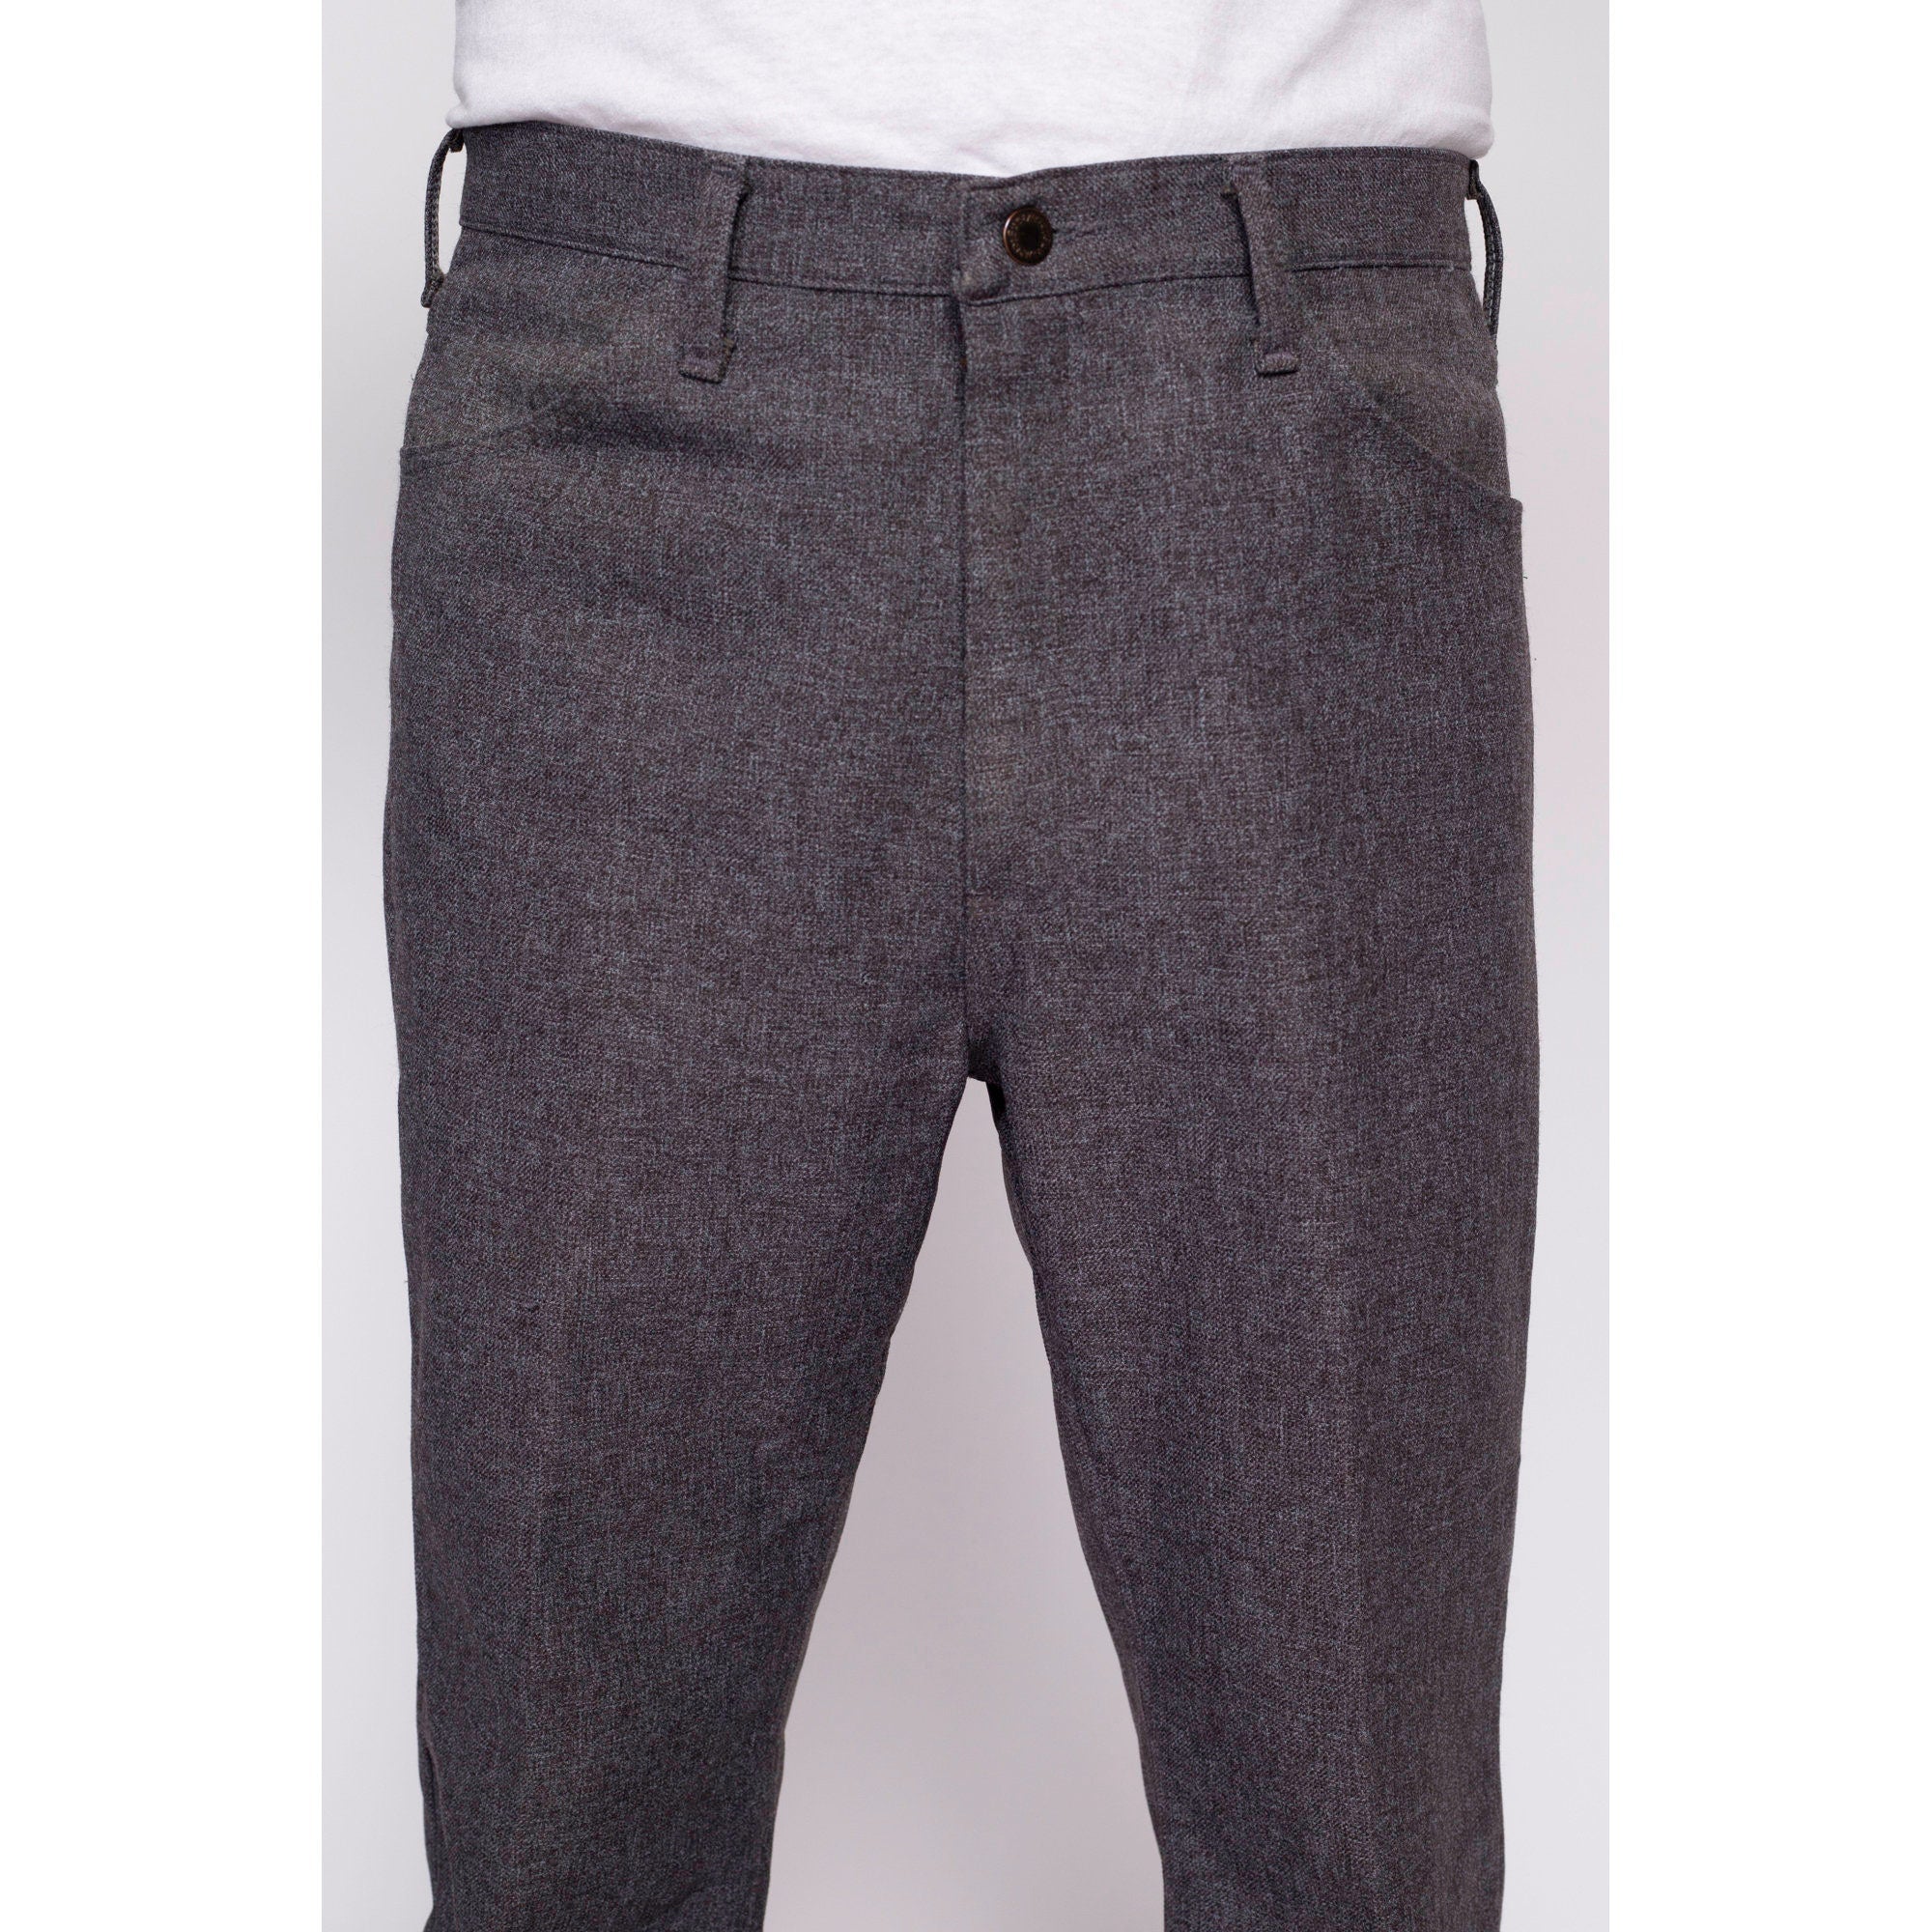 Mens Flared Bell Bottom Pants Business Smart Bootcut Trousers Slim Fit  Plain | eBay